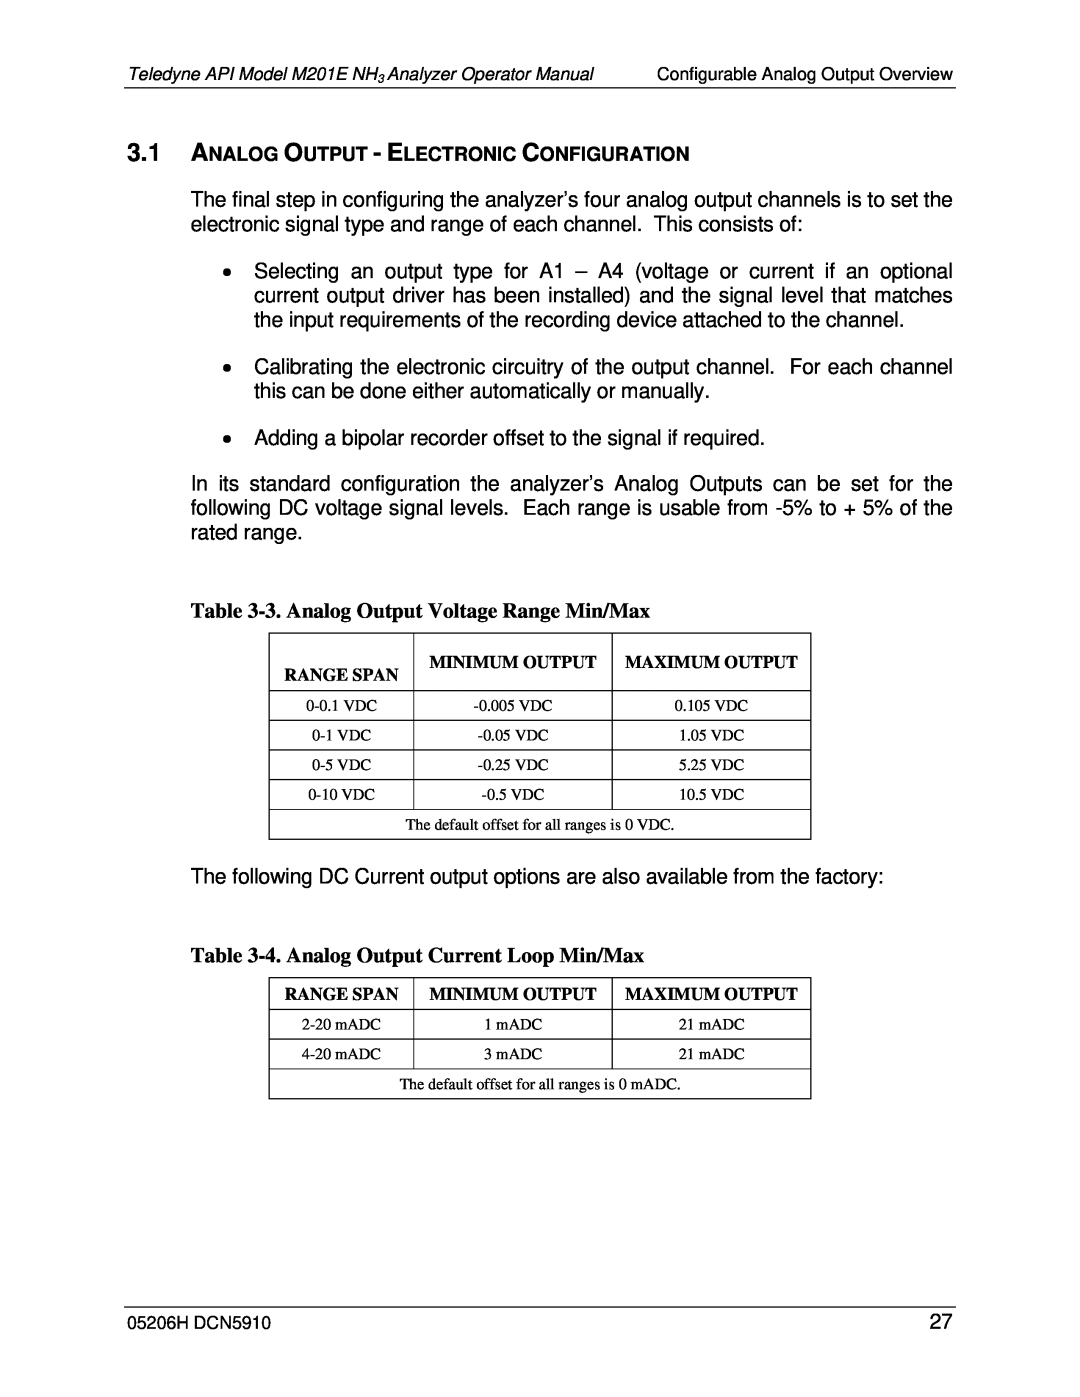 Teledyne M201E manual 3.Analog Output Voltage Range Min/Max, 4.Analog Output Current Loop Min/Max 